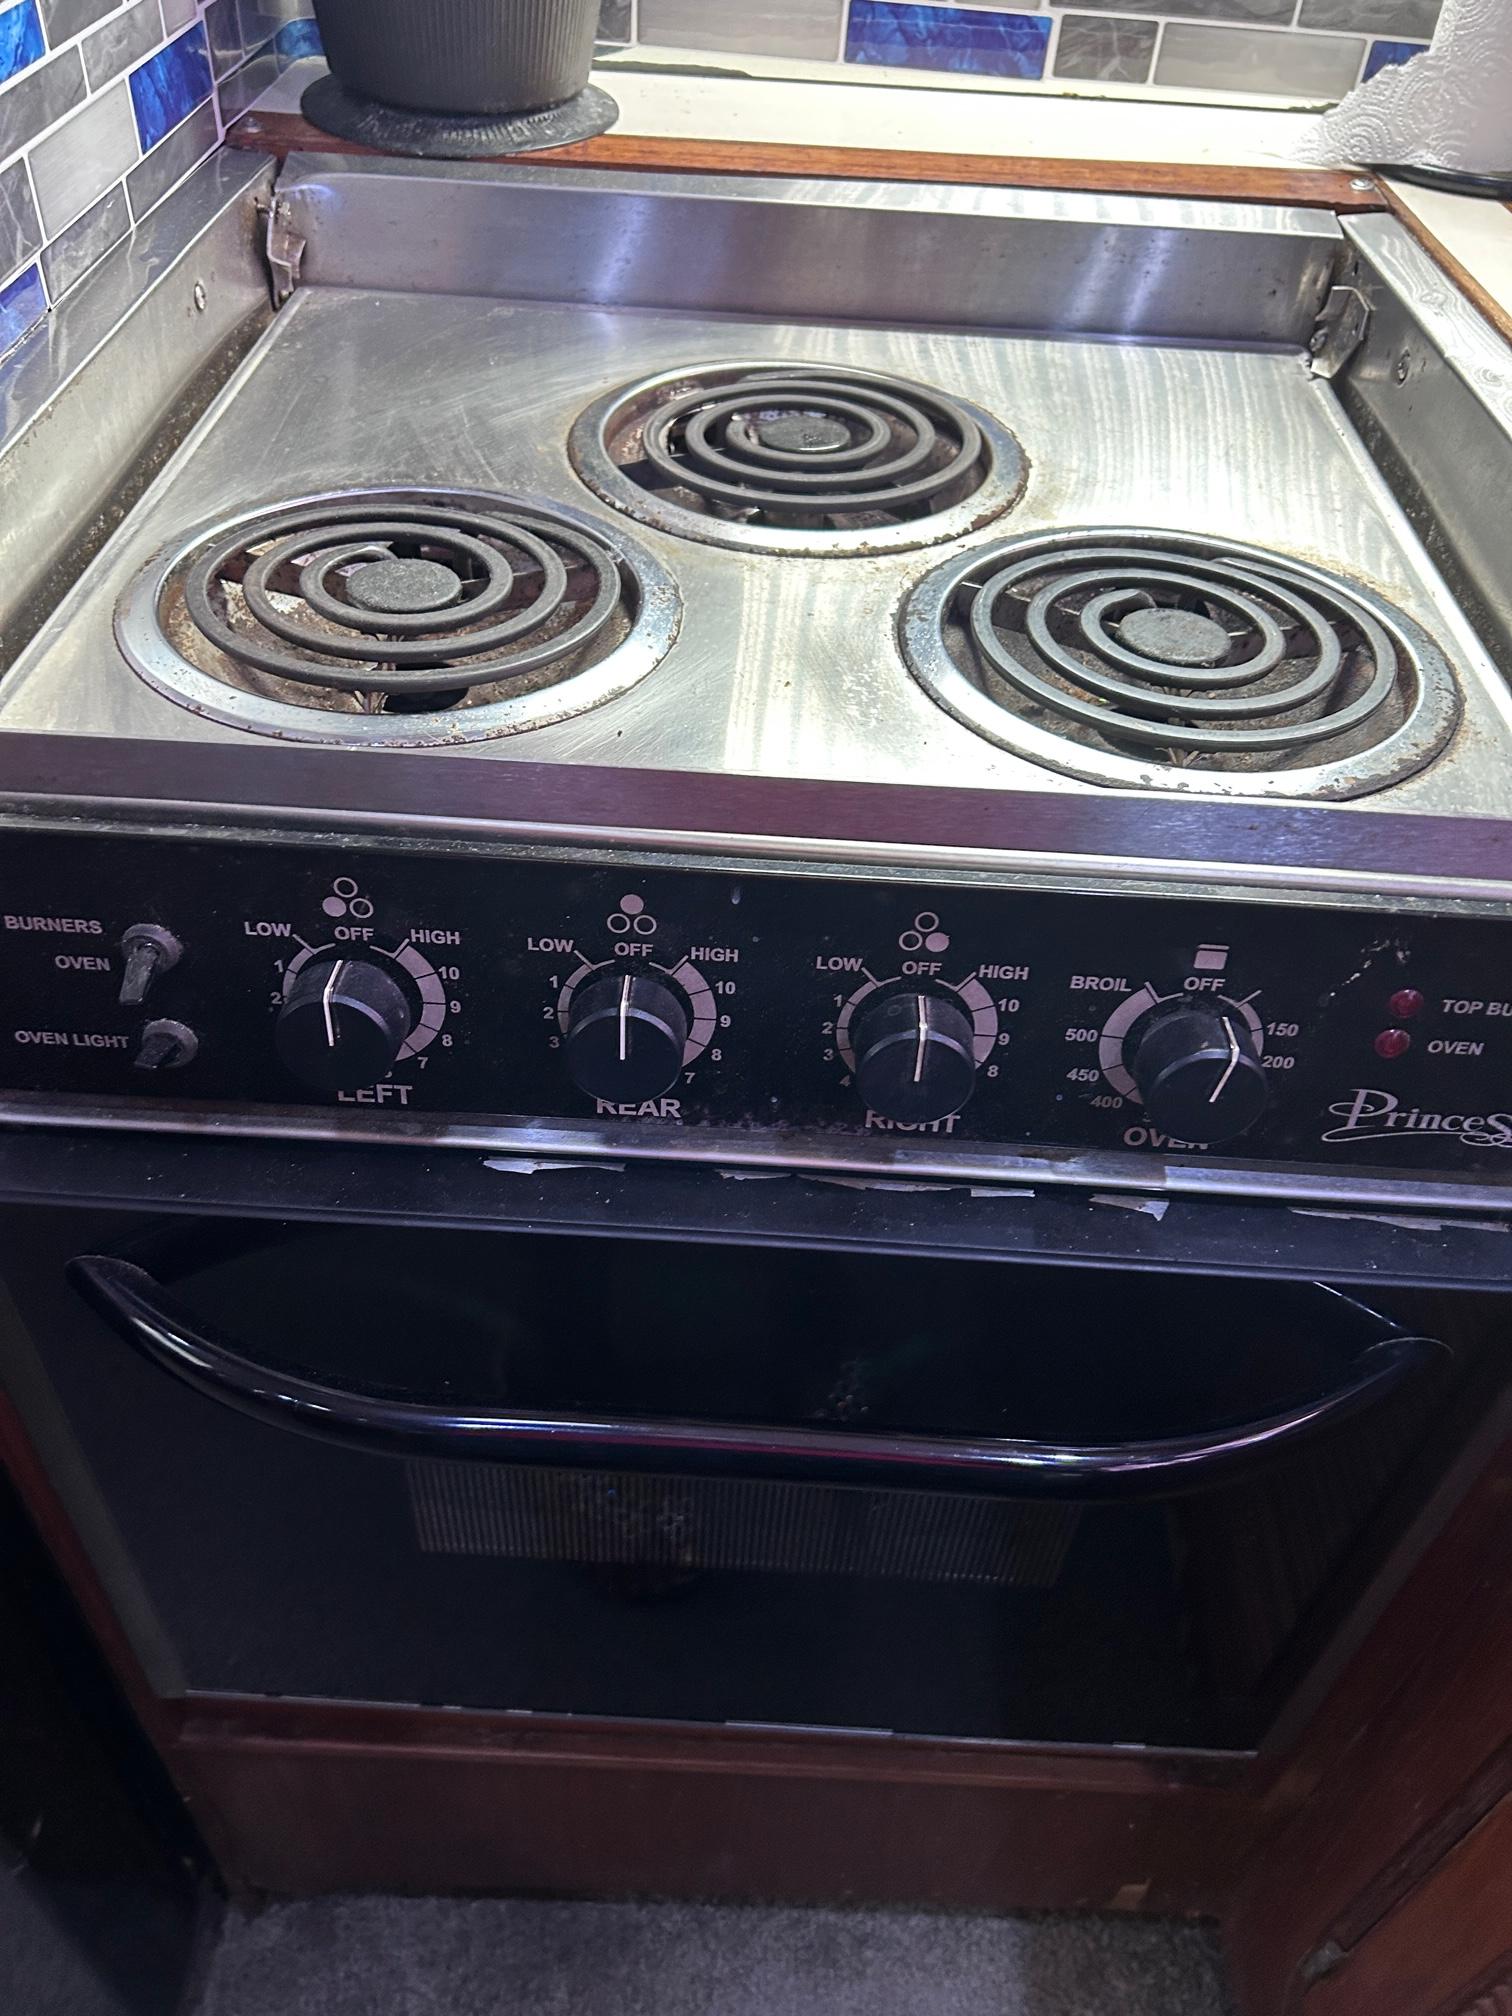 3 Burner Princess stove with oven